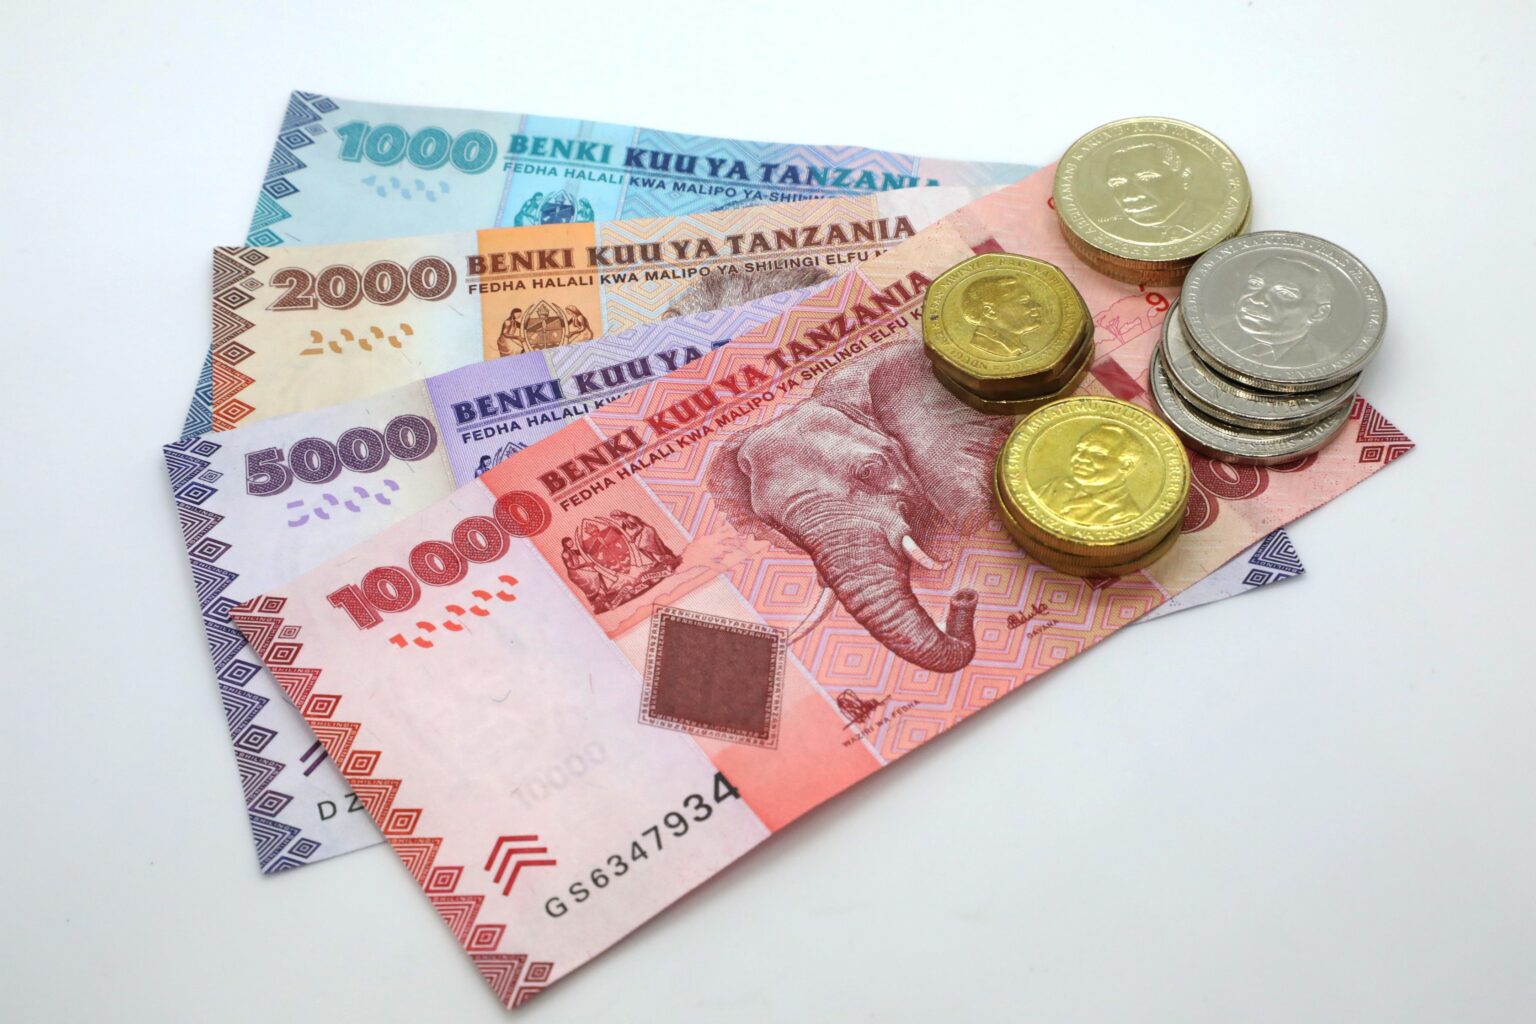 Inflation in Tanzania